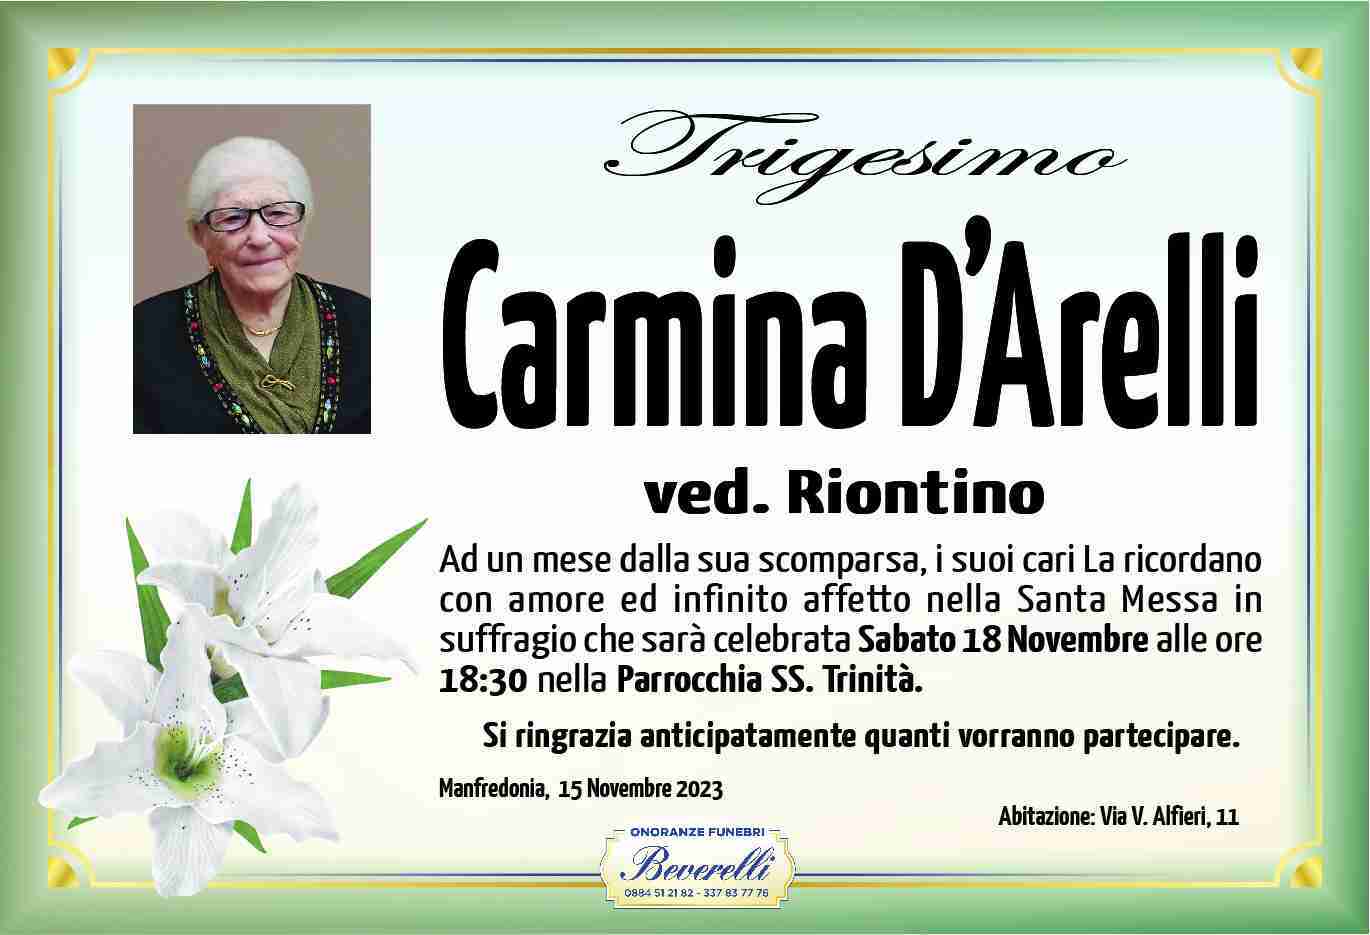 Carmina D'Arelli